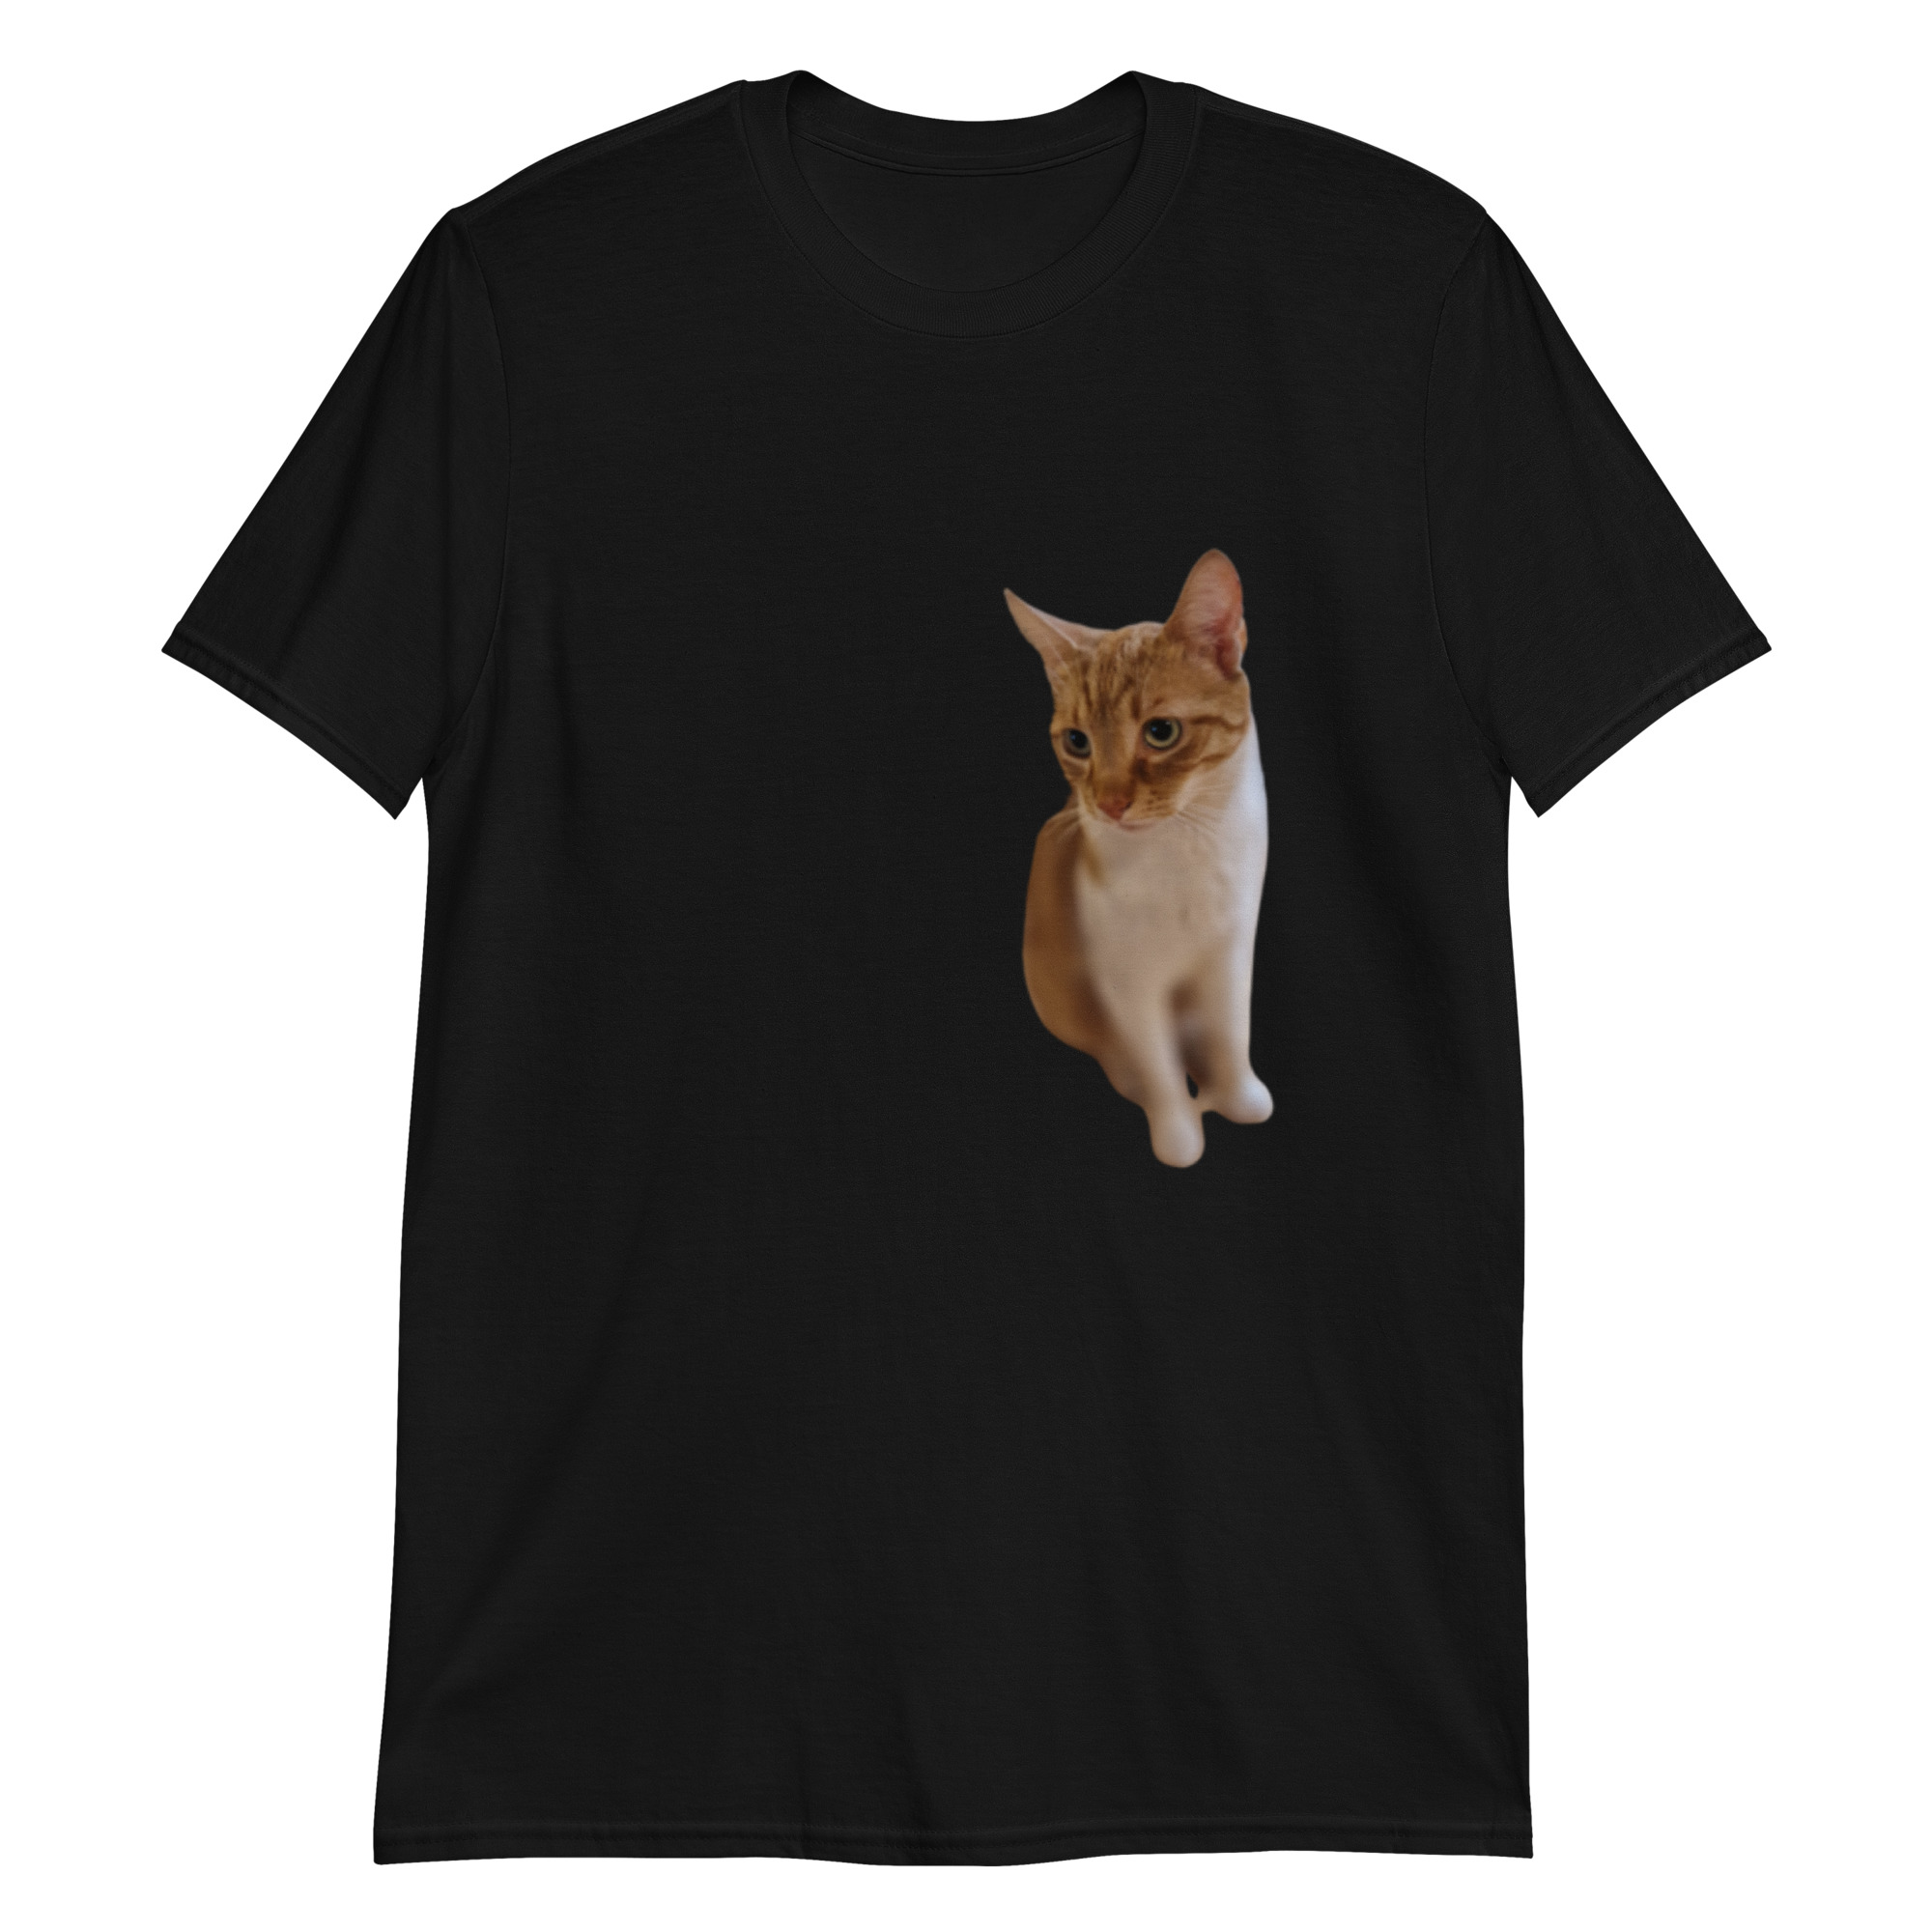 Kurzärmeliges Unisex-T-Shirt mit Katze